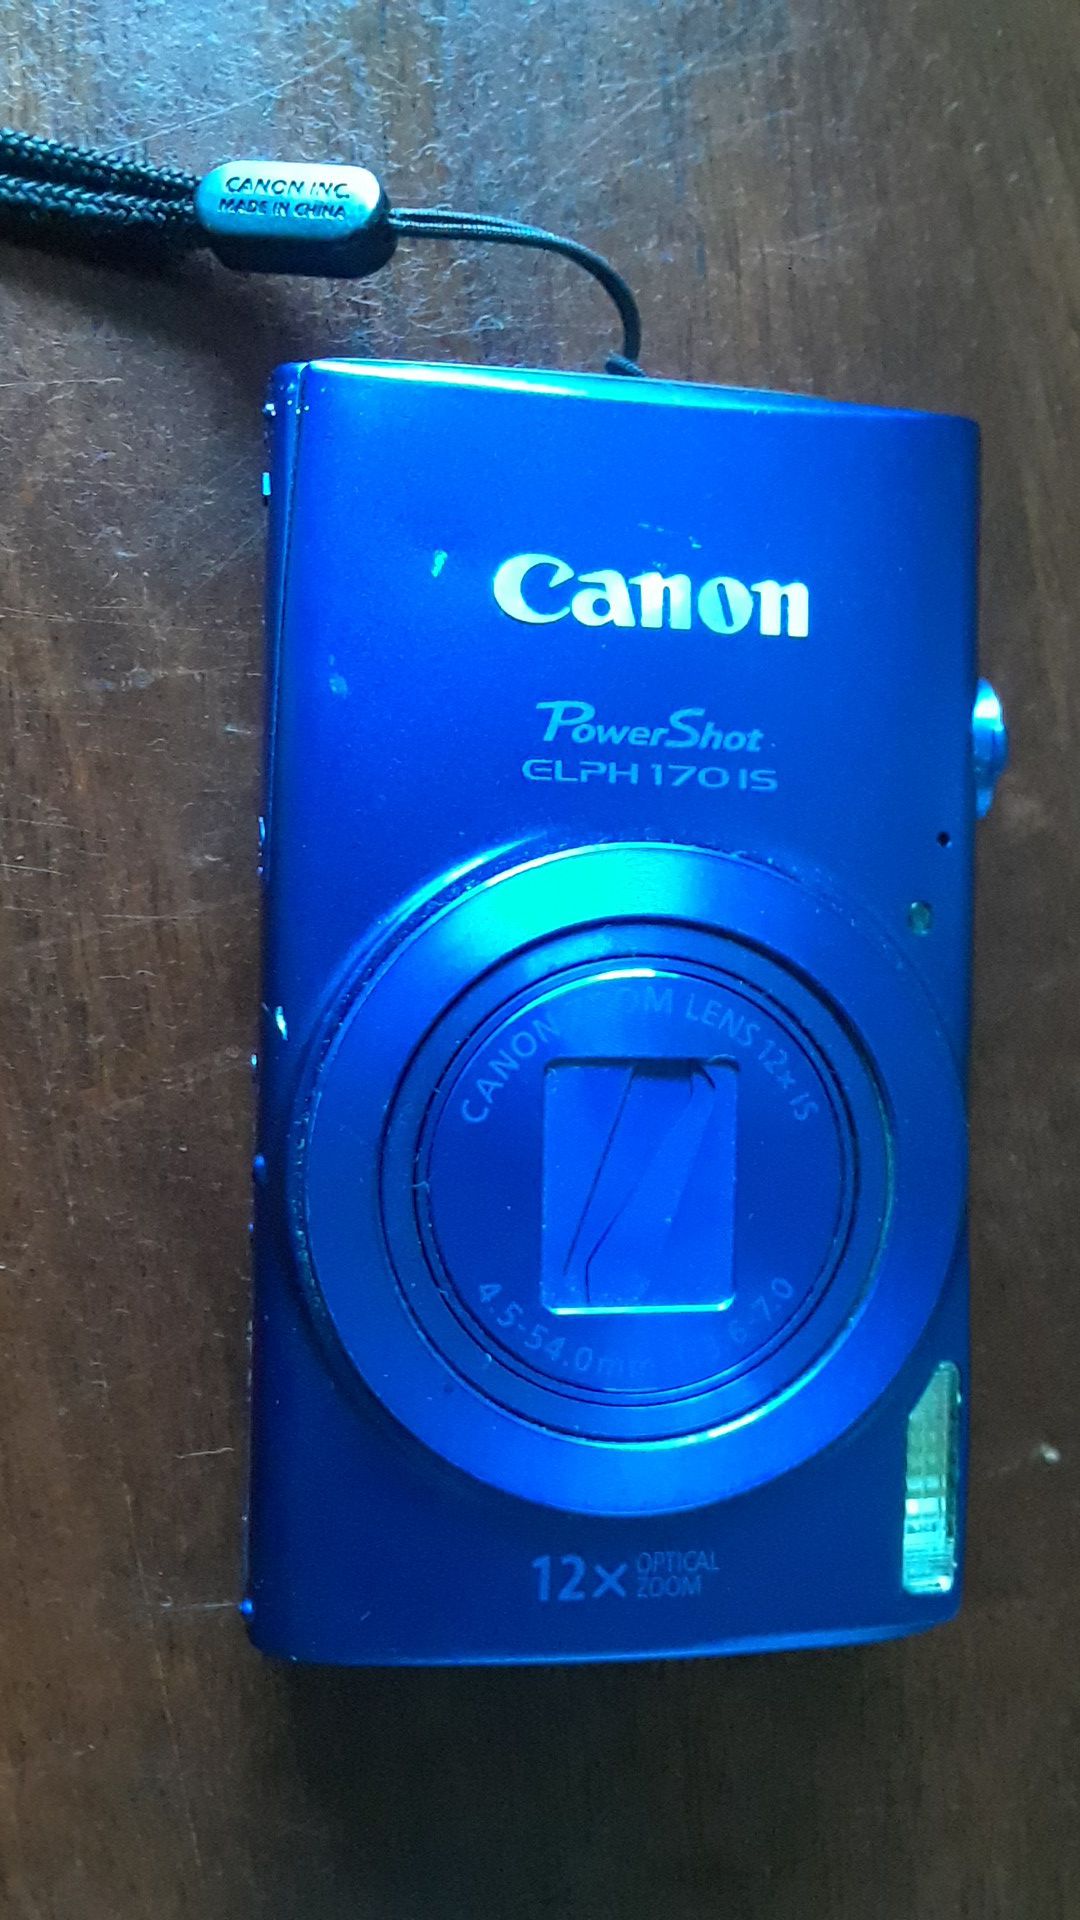 Canon elph 170is digital camera